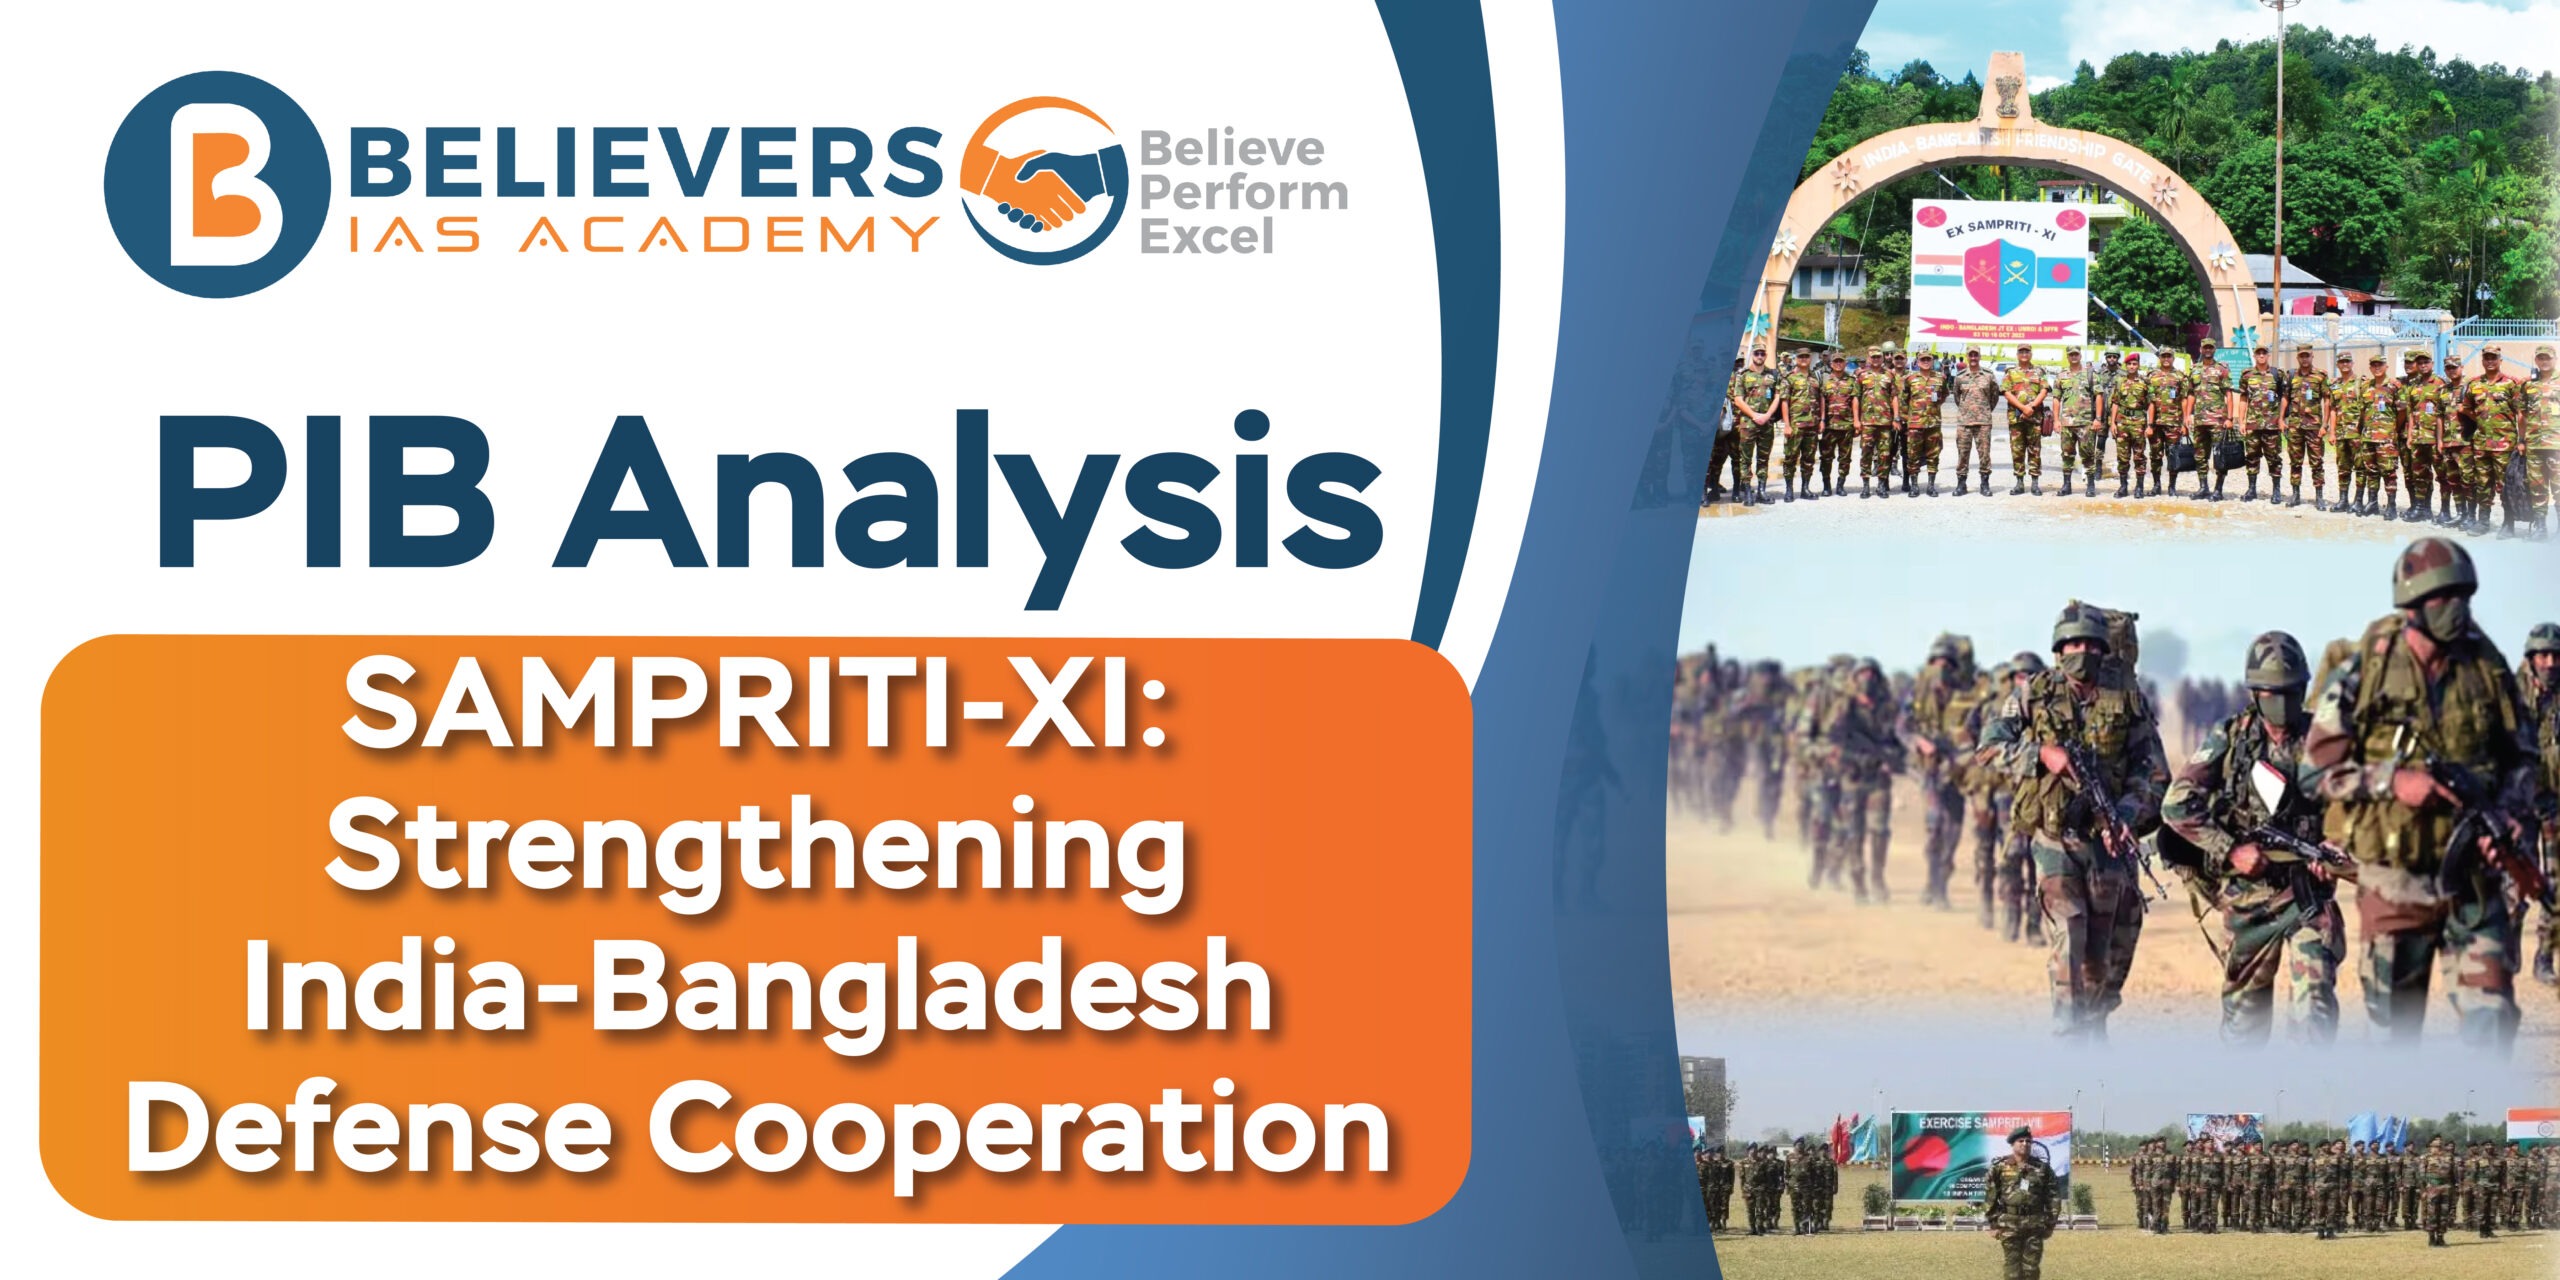 SAMPRITI-XI: Strengthening India-Bangladesh Defense Cooperation